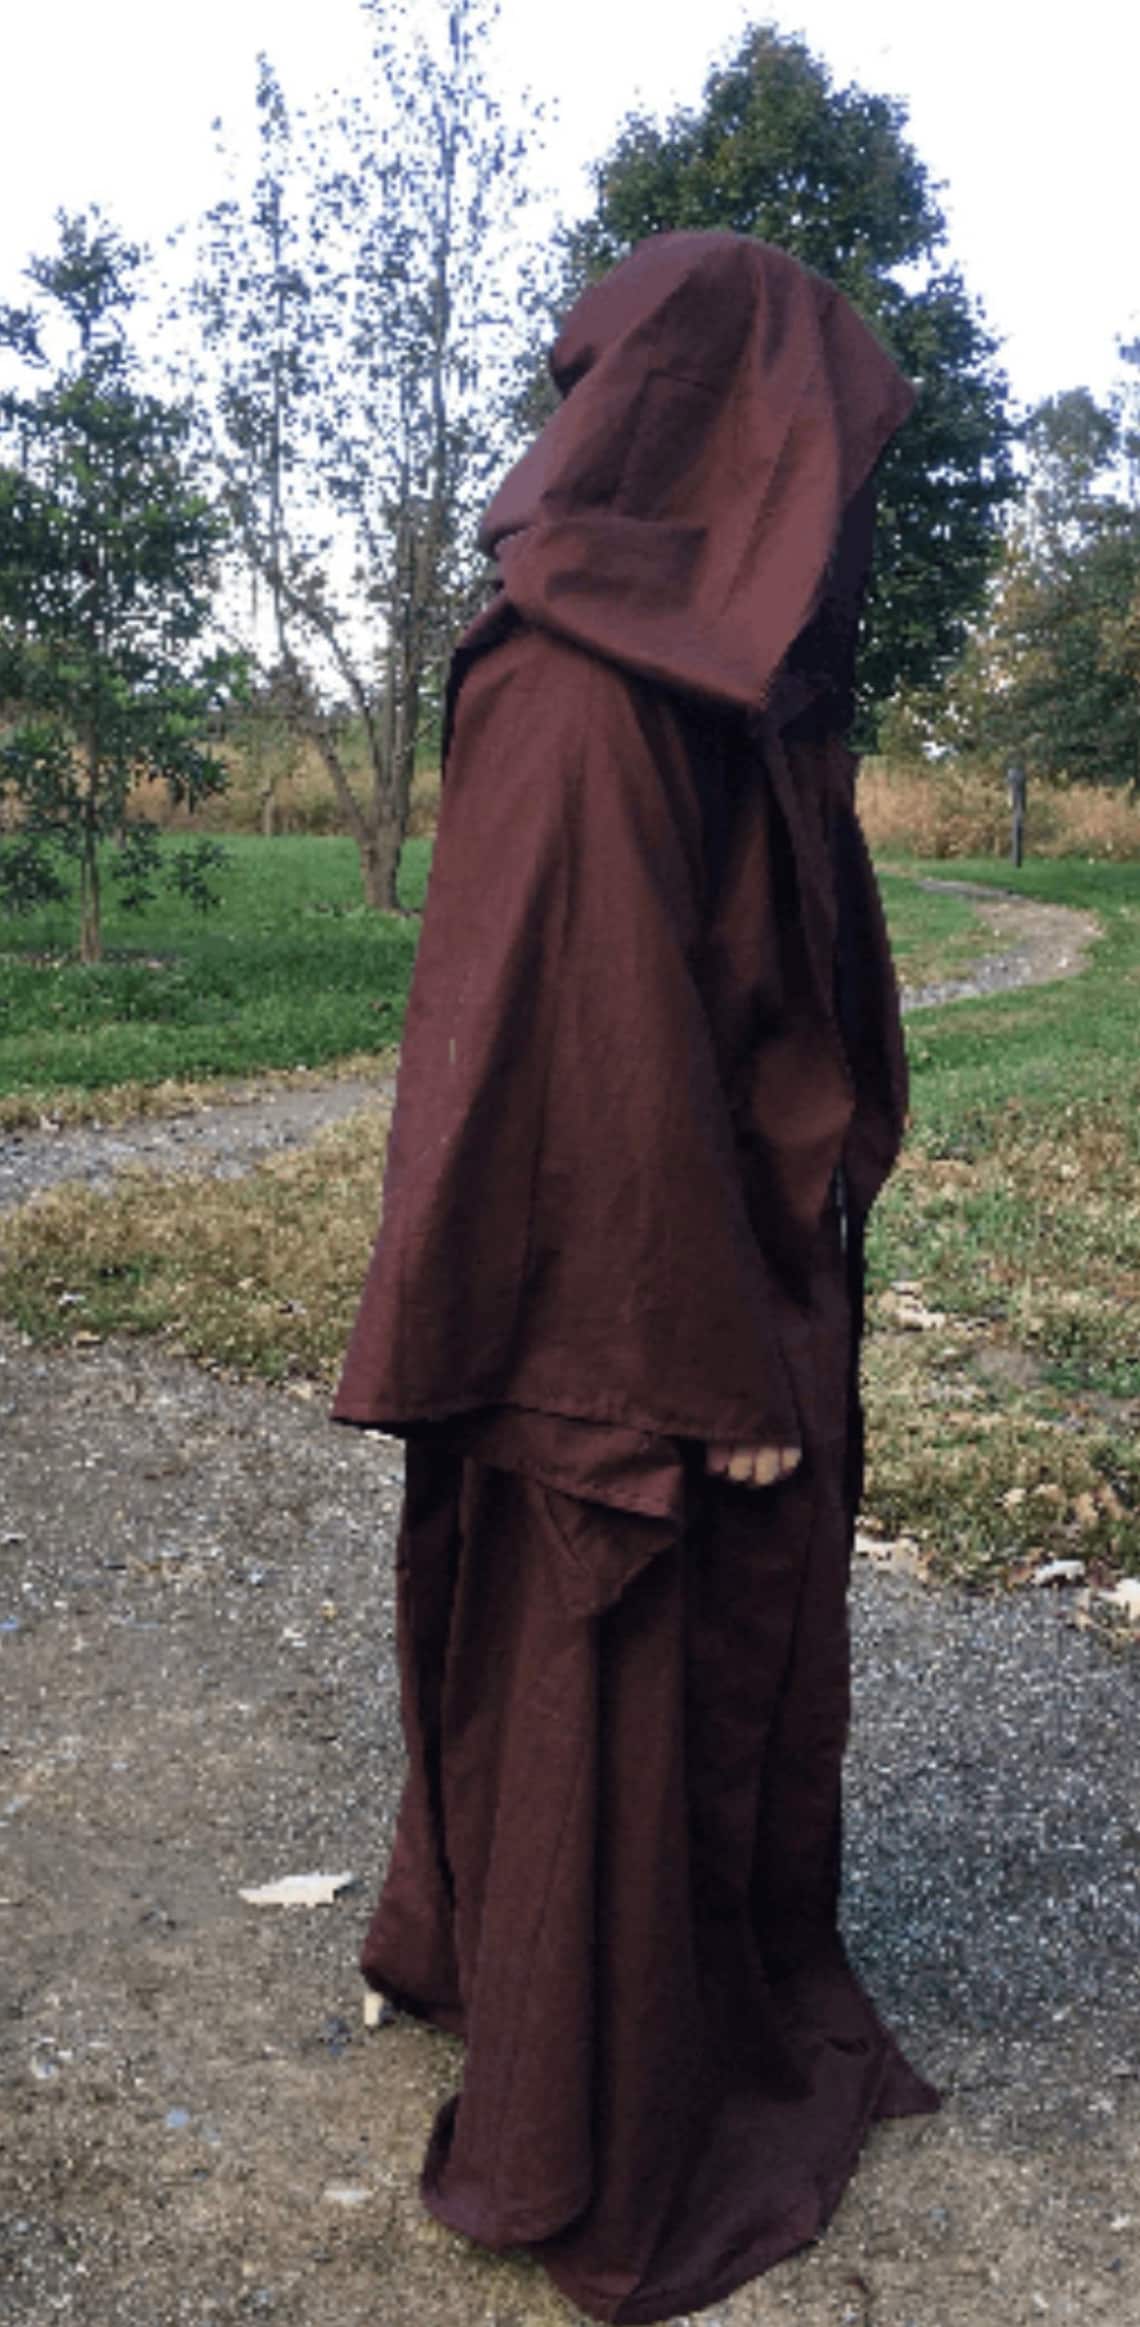 Jedi robe master jedi robe padawan robe brown robe with | Etsy